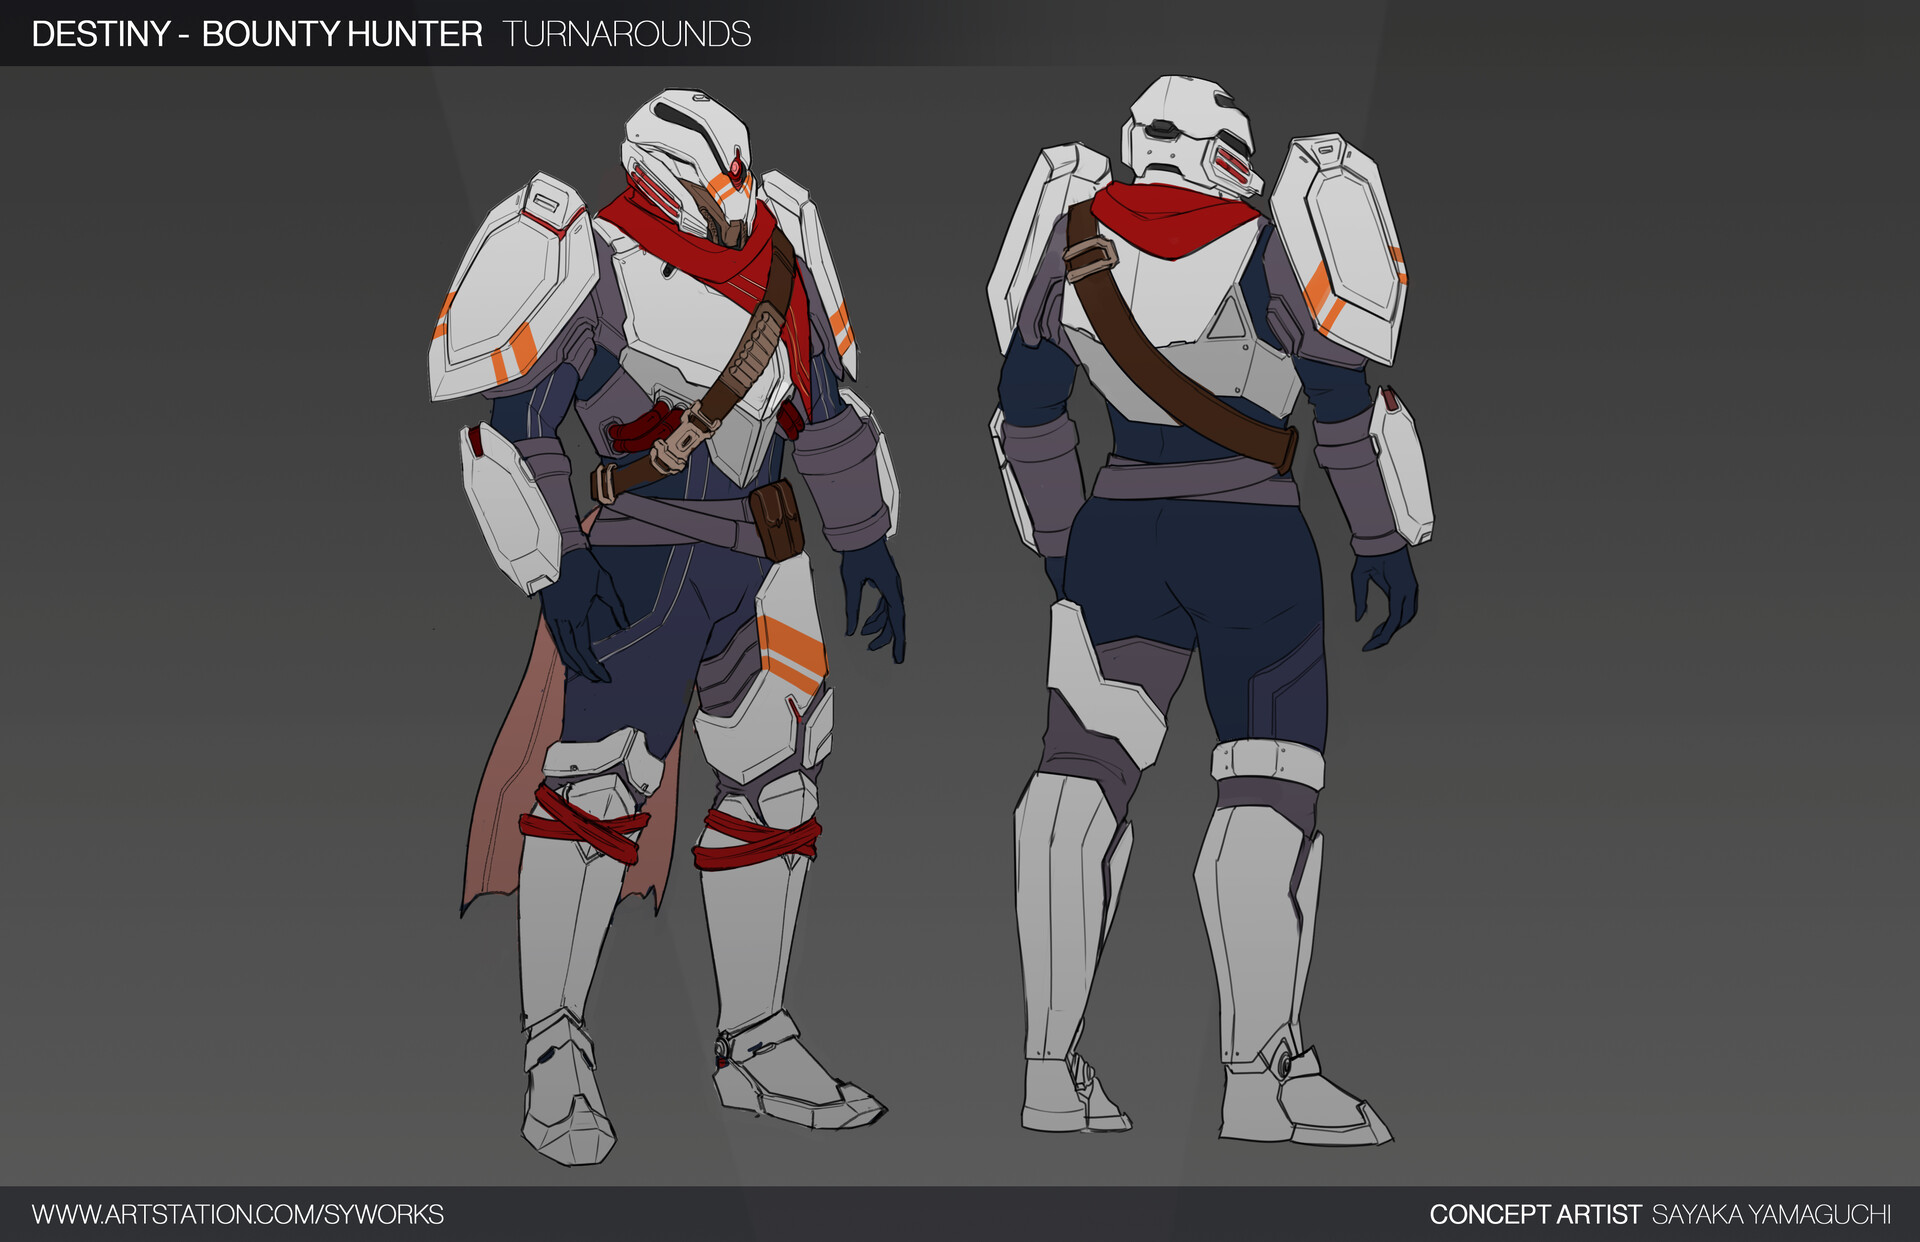 Sayaka Yamaguchi - Concept Artist - Destiny fan-design Vanguard Titan armor...